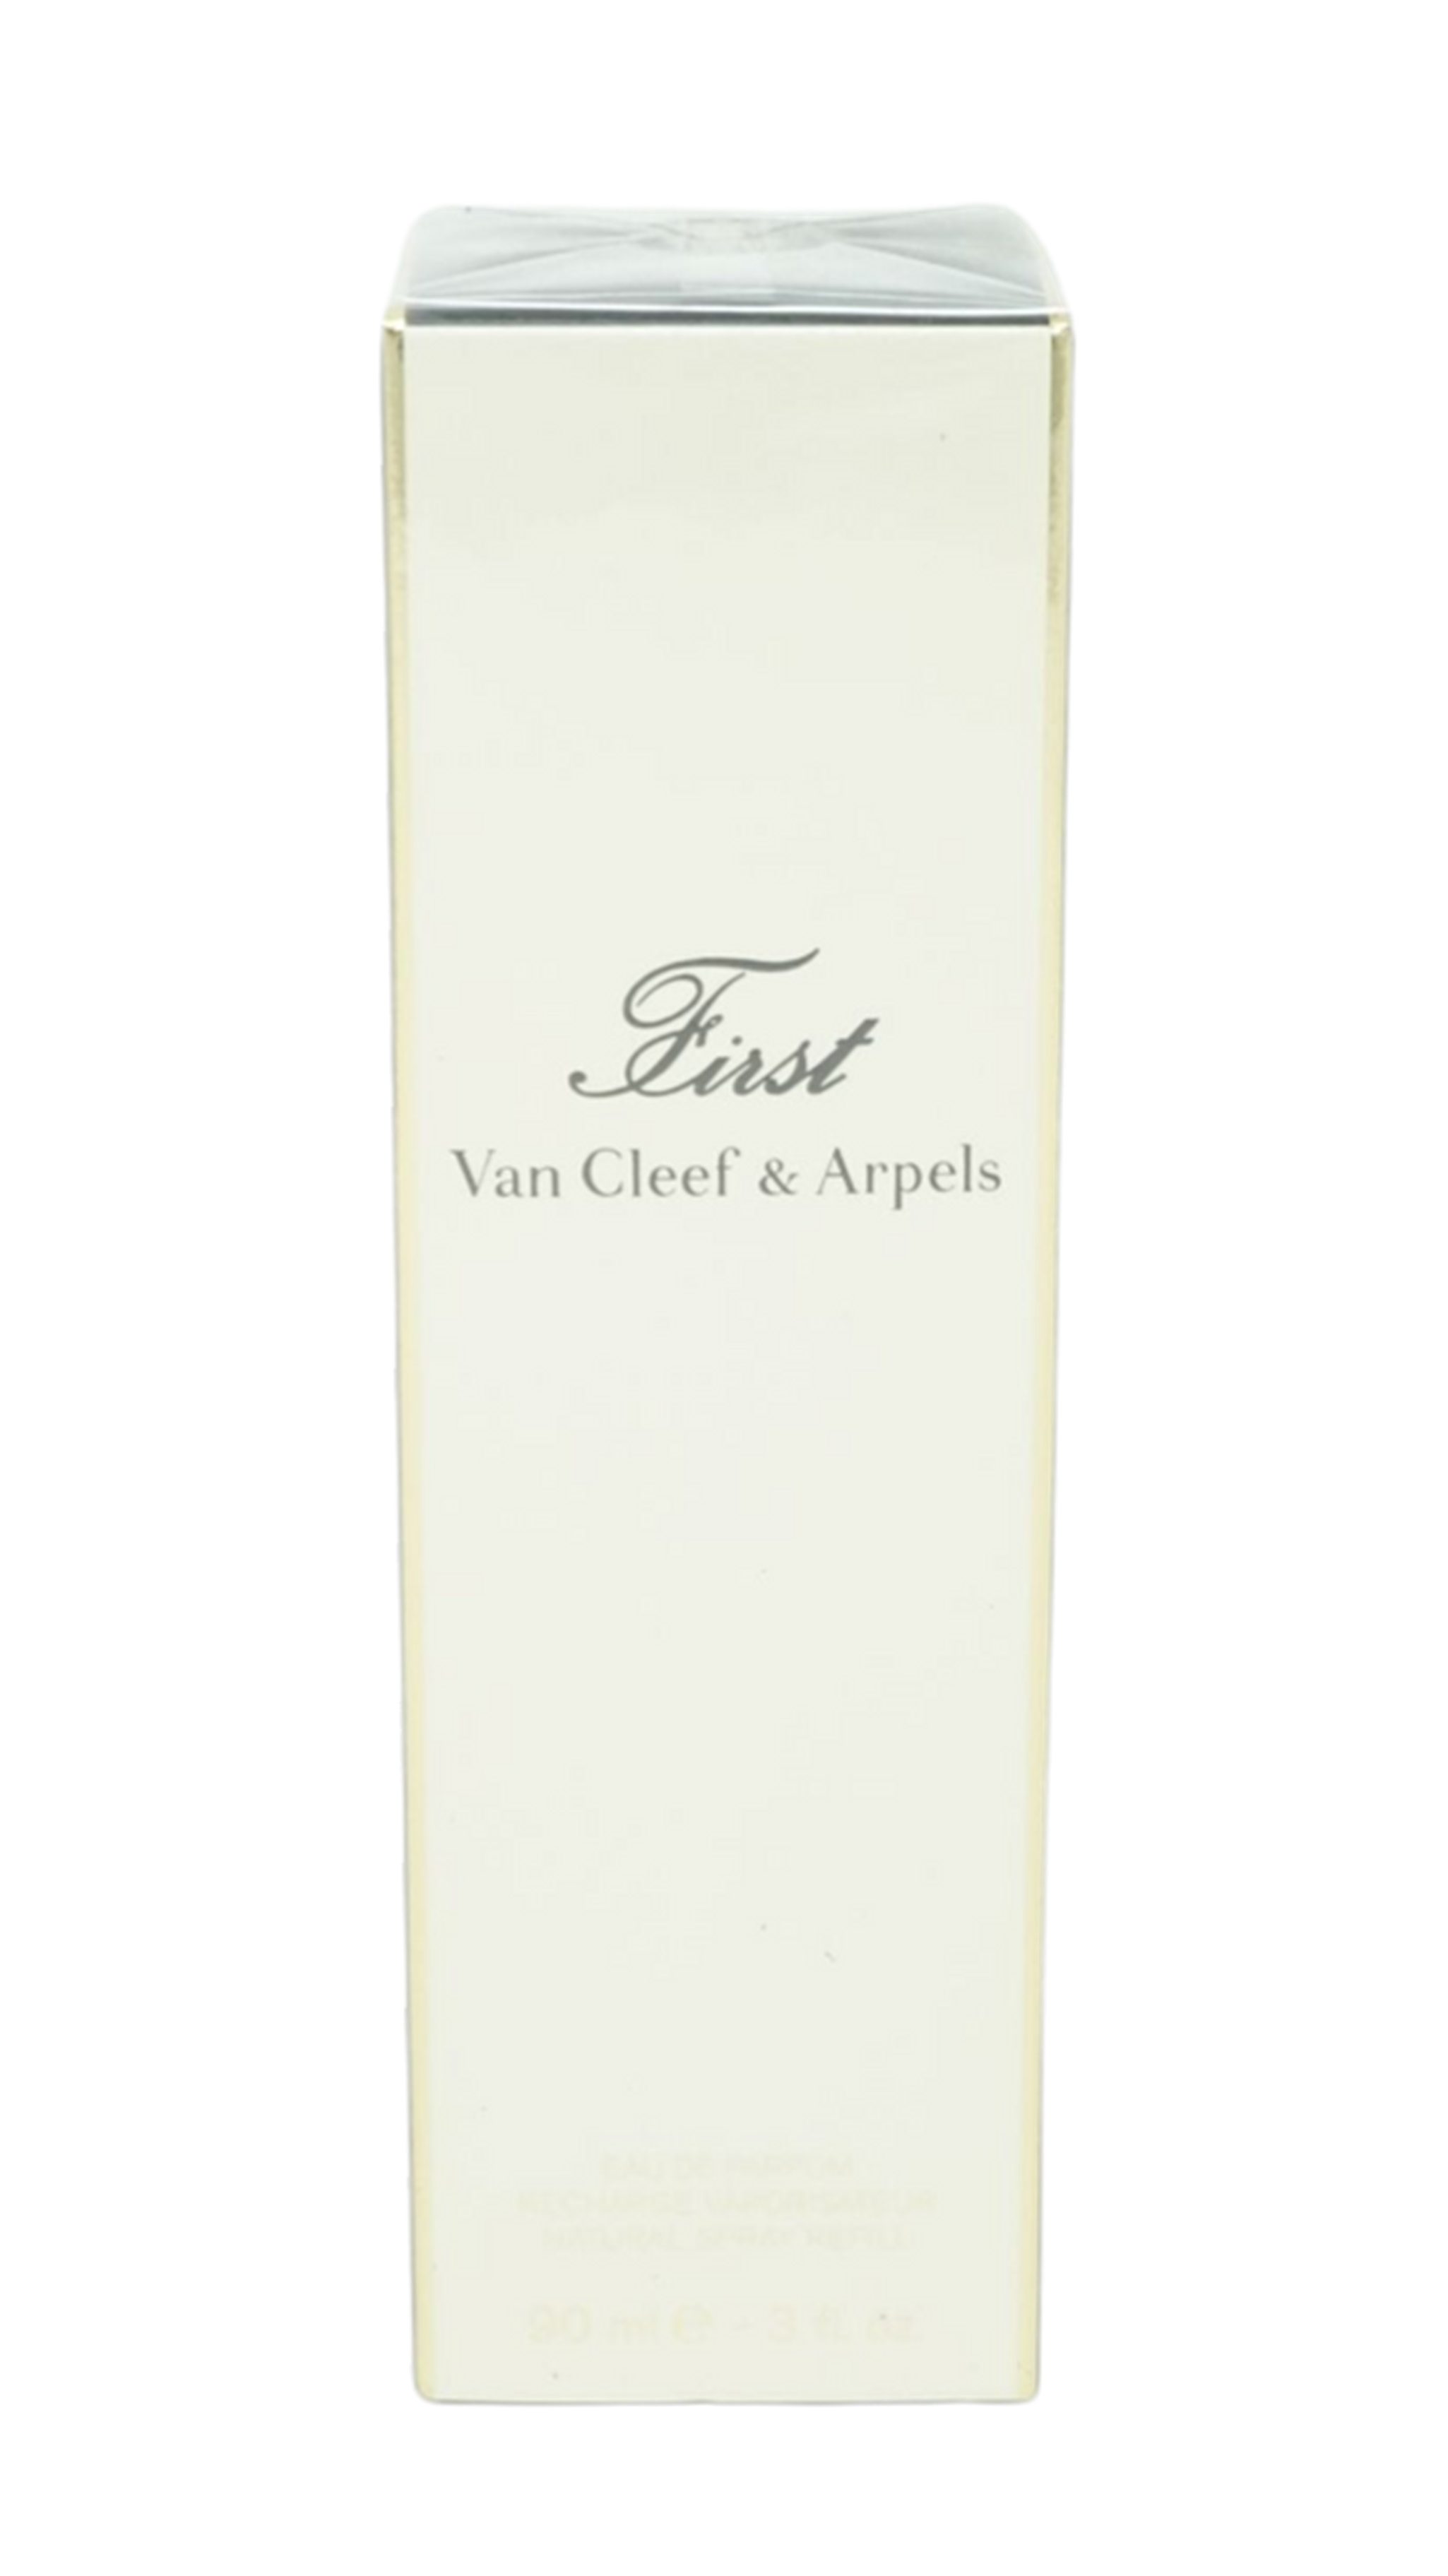 Van Cleef & Arpels Eau de Parfum Van Cleef & Arpels First Eau de Parfum Spray 90ml